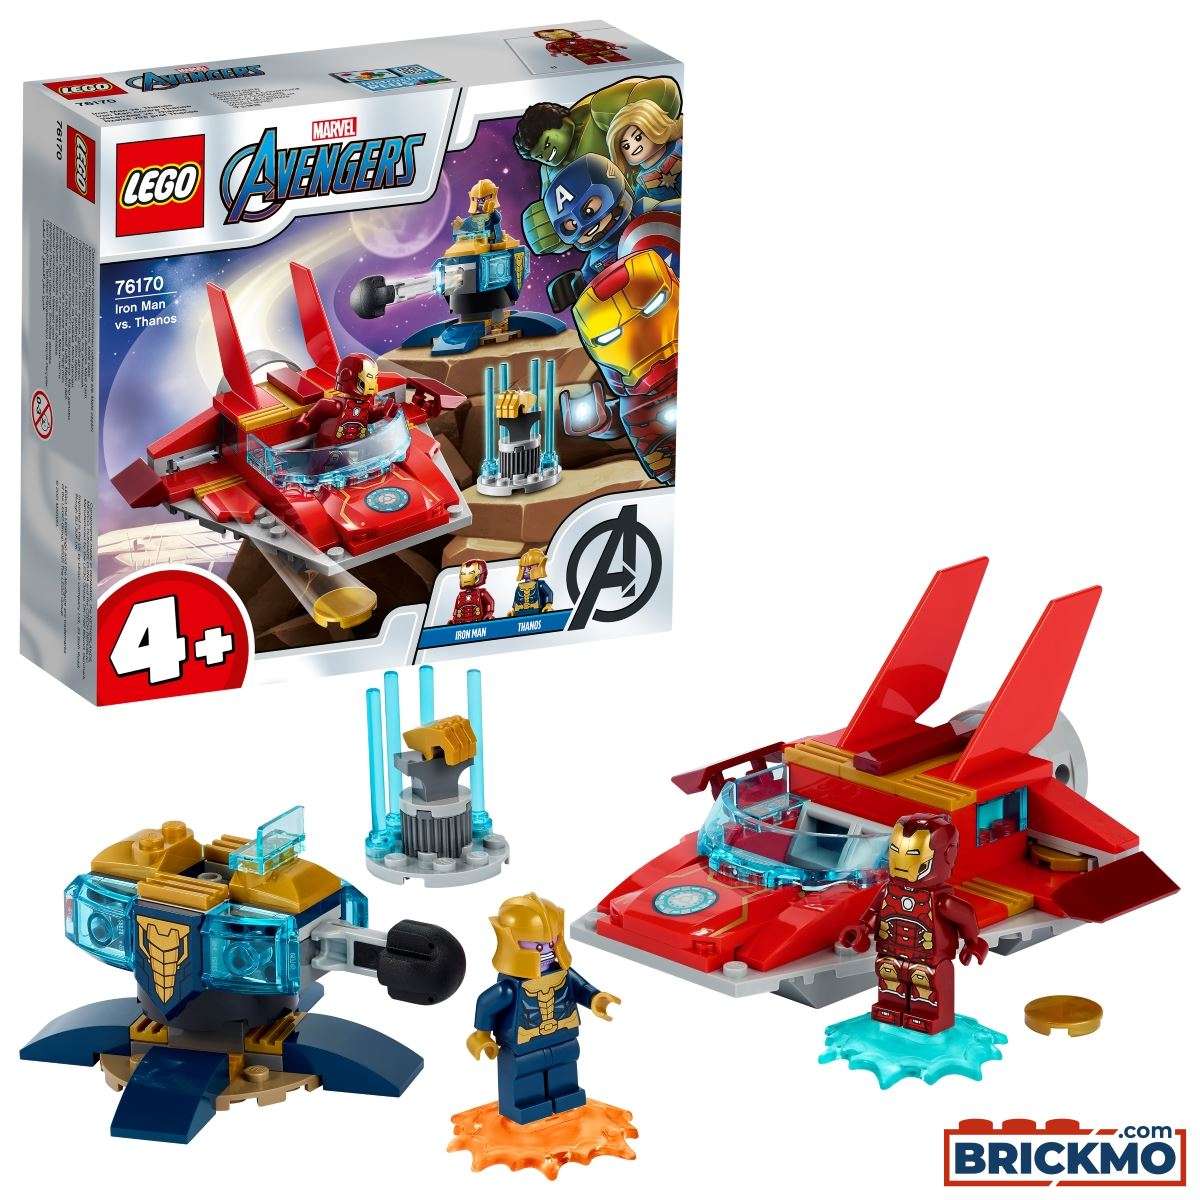 LEGO Marvel Super Heroes 76170 Iron Man vs. Thanos 76170